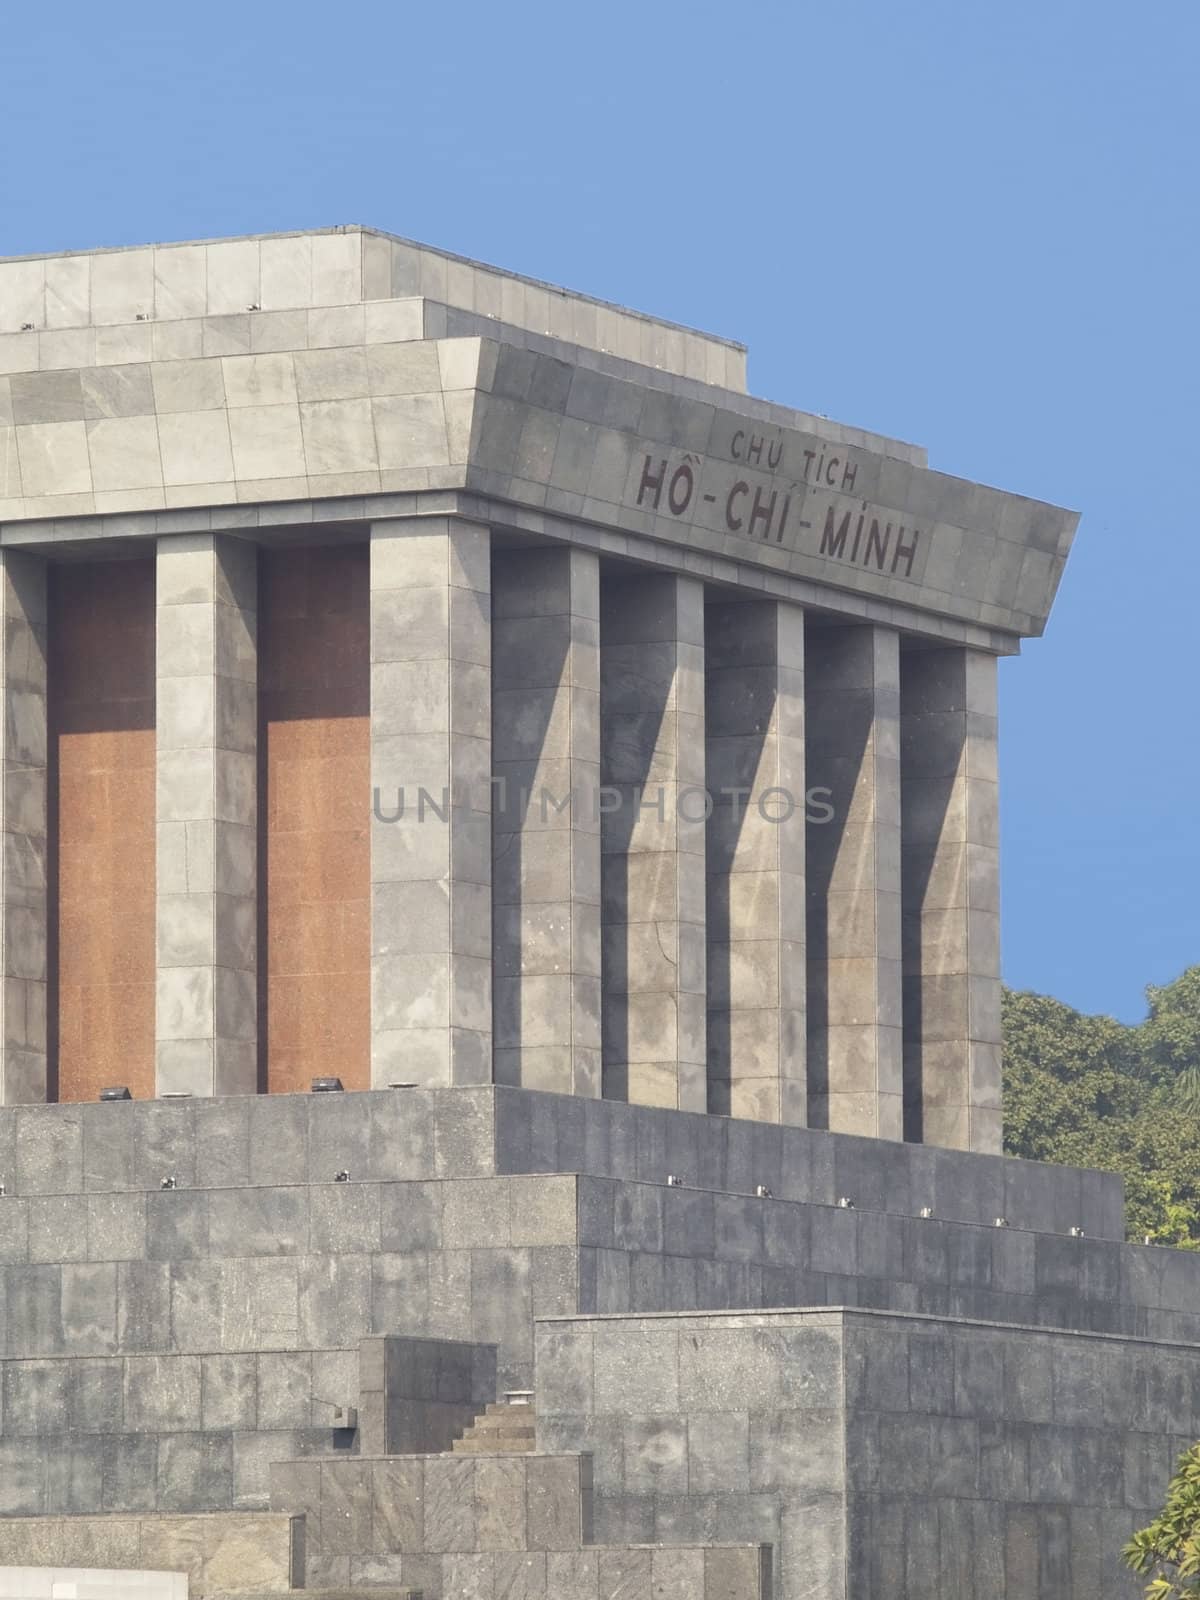 The Ho Chi Minh mausoleum in Hanoi, Vietnam